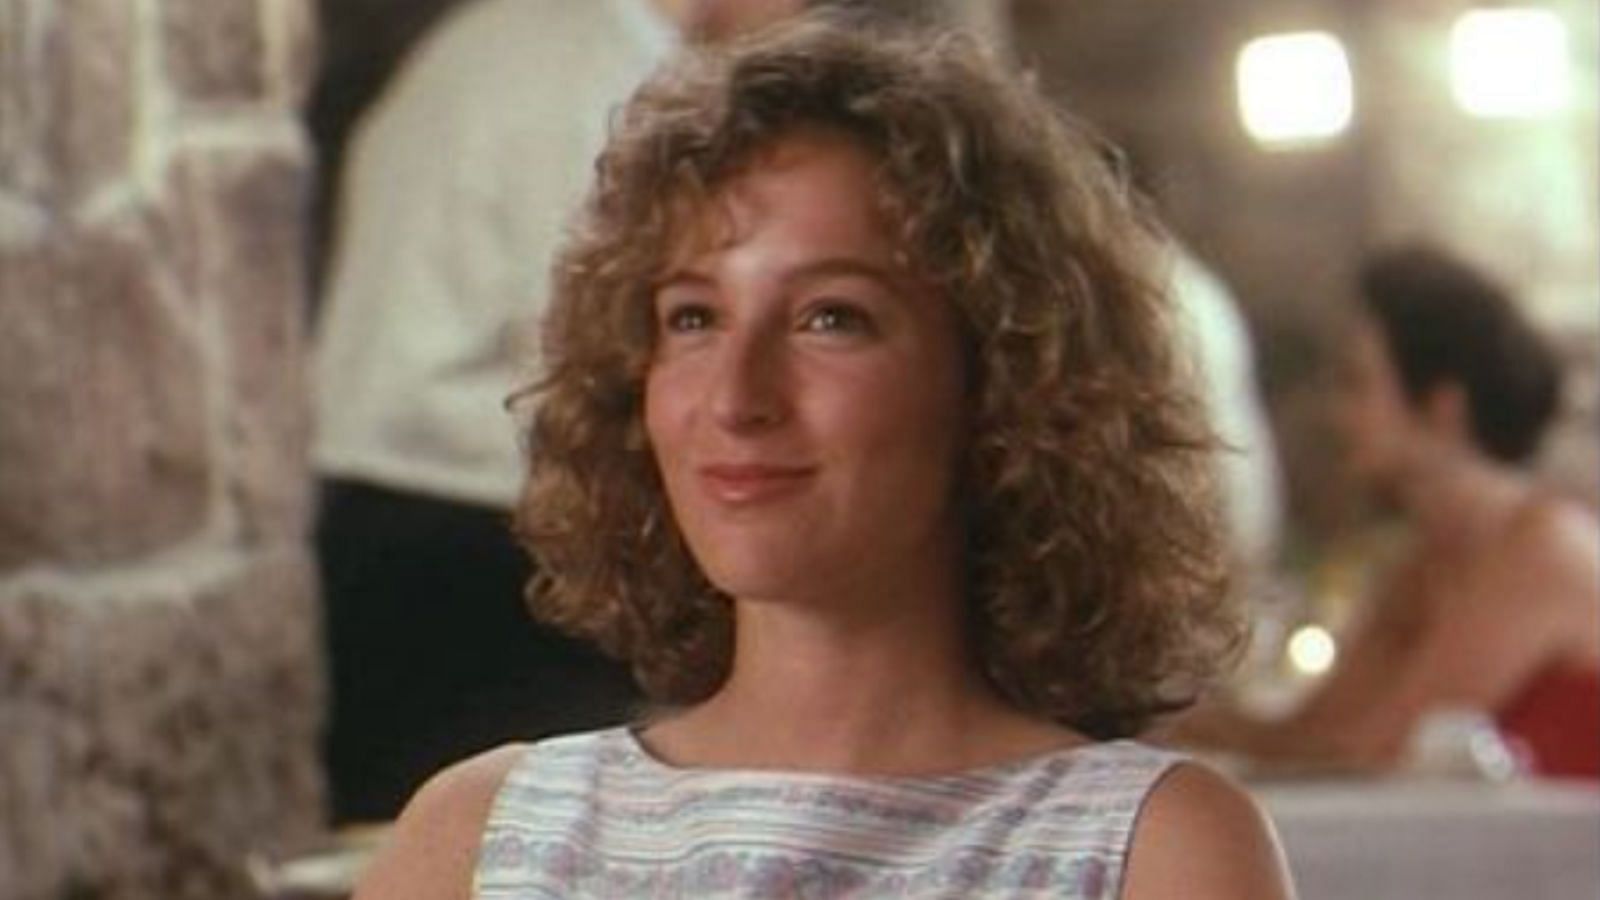 Jennifer Stahl in Dirty Dancing (Image via IMDb)